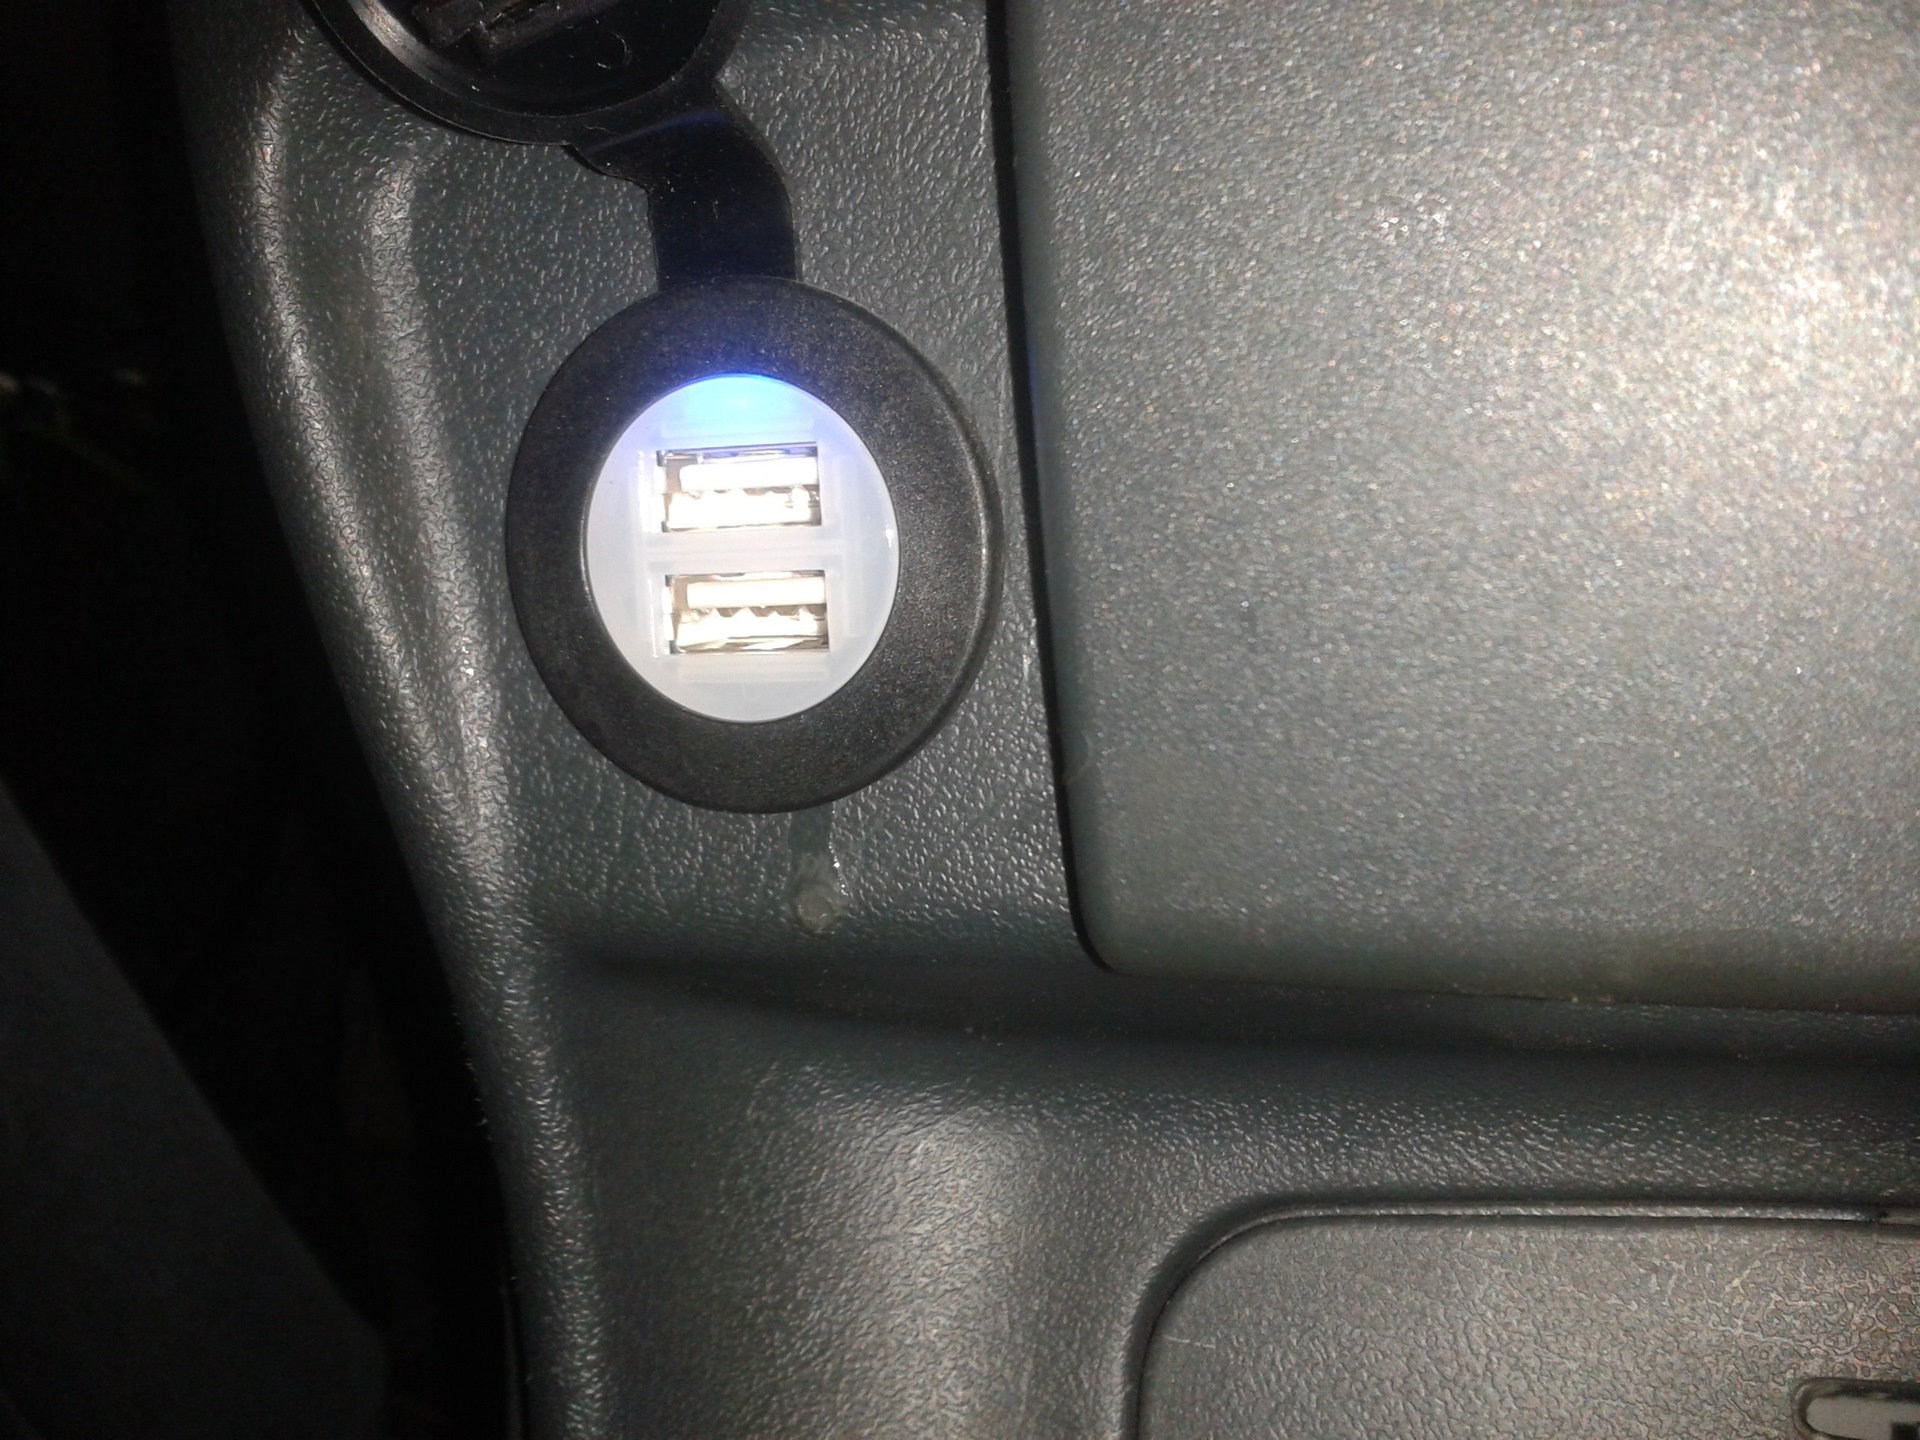 Usb car charger вместо прикуривателя